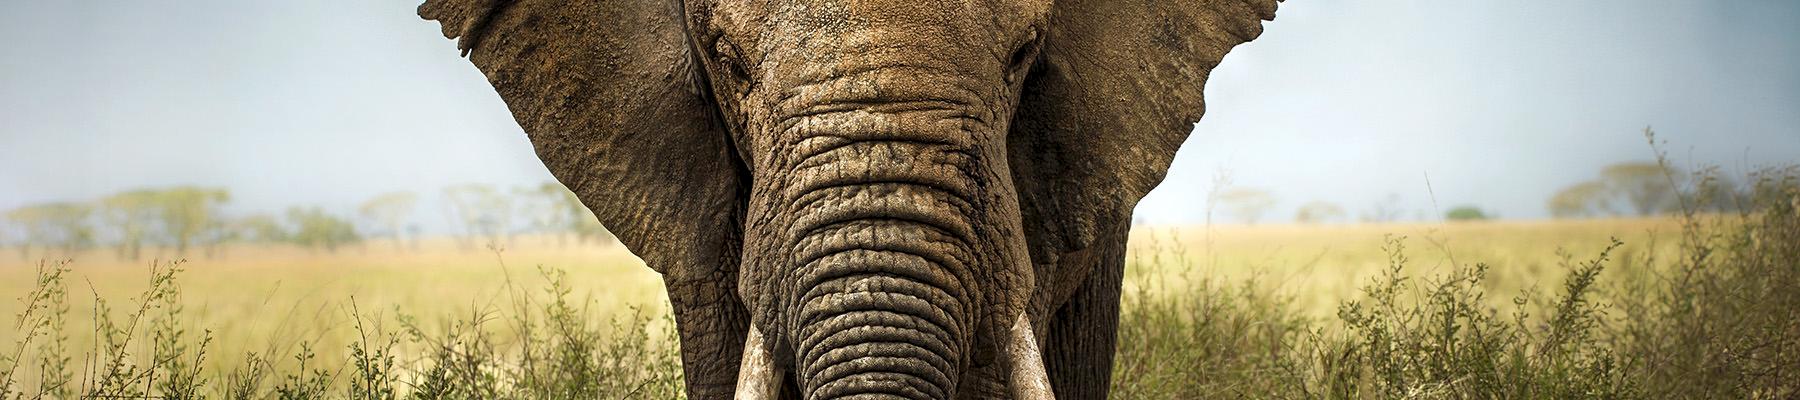 African Elephant Loxodonta Africana © Shutterstock / Lara Zanarini / WWF-Sweden